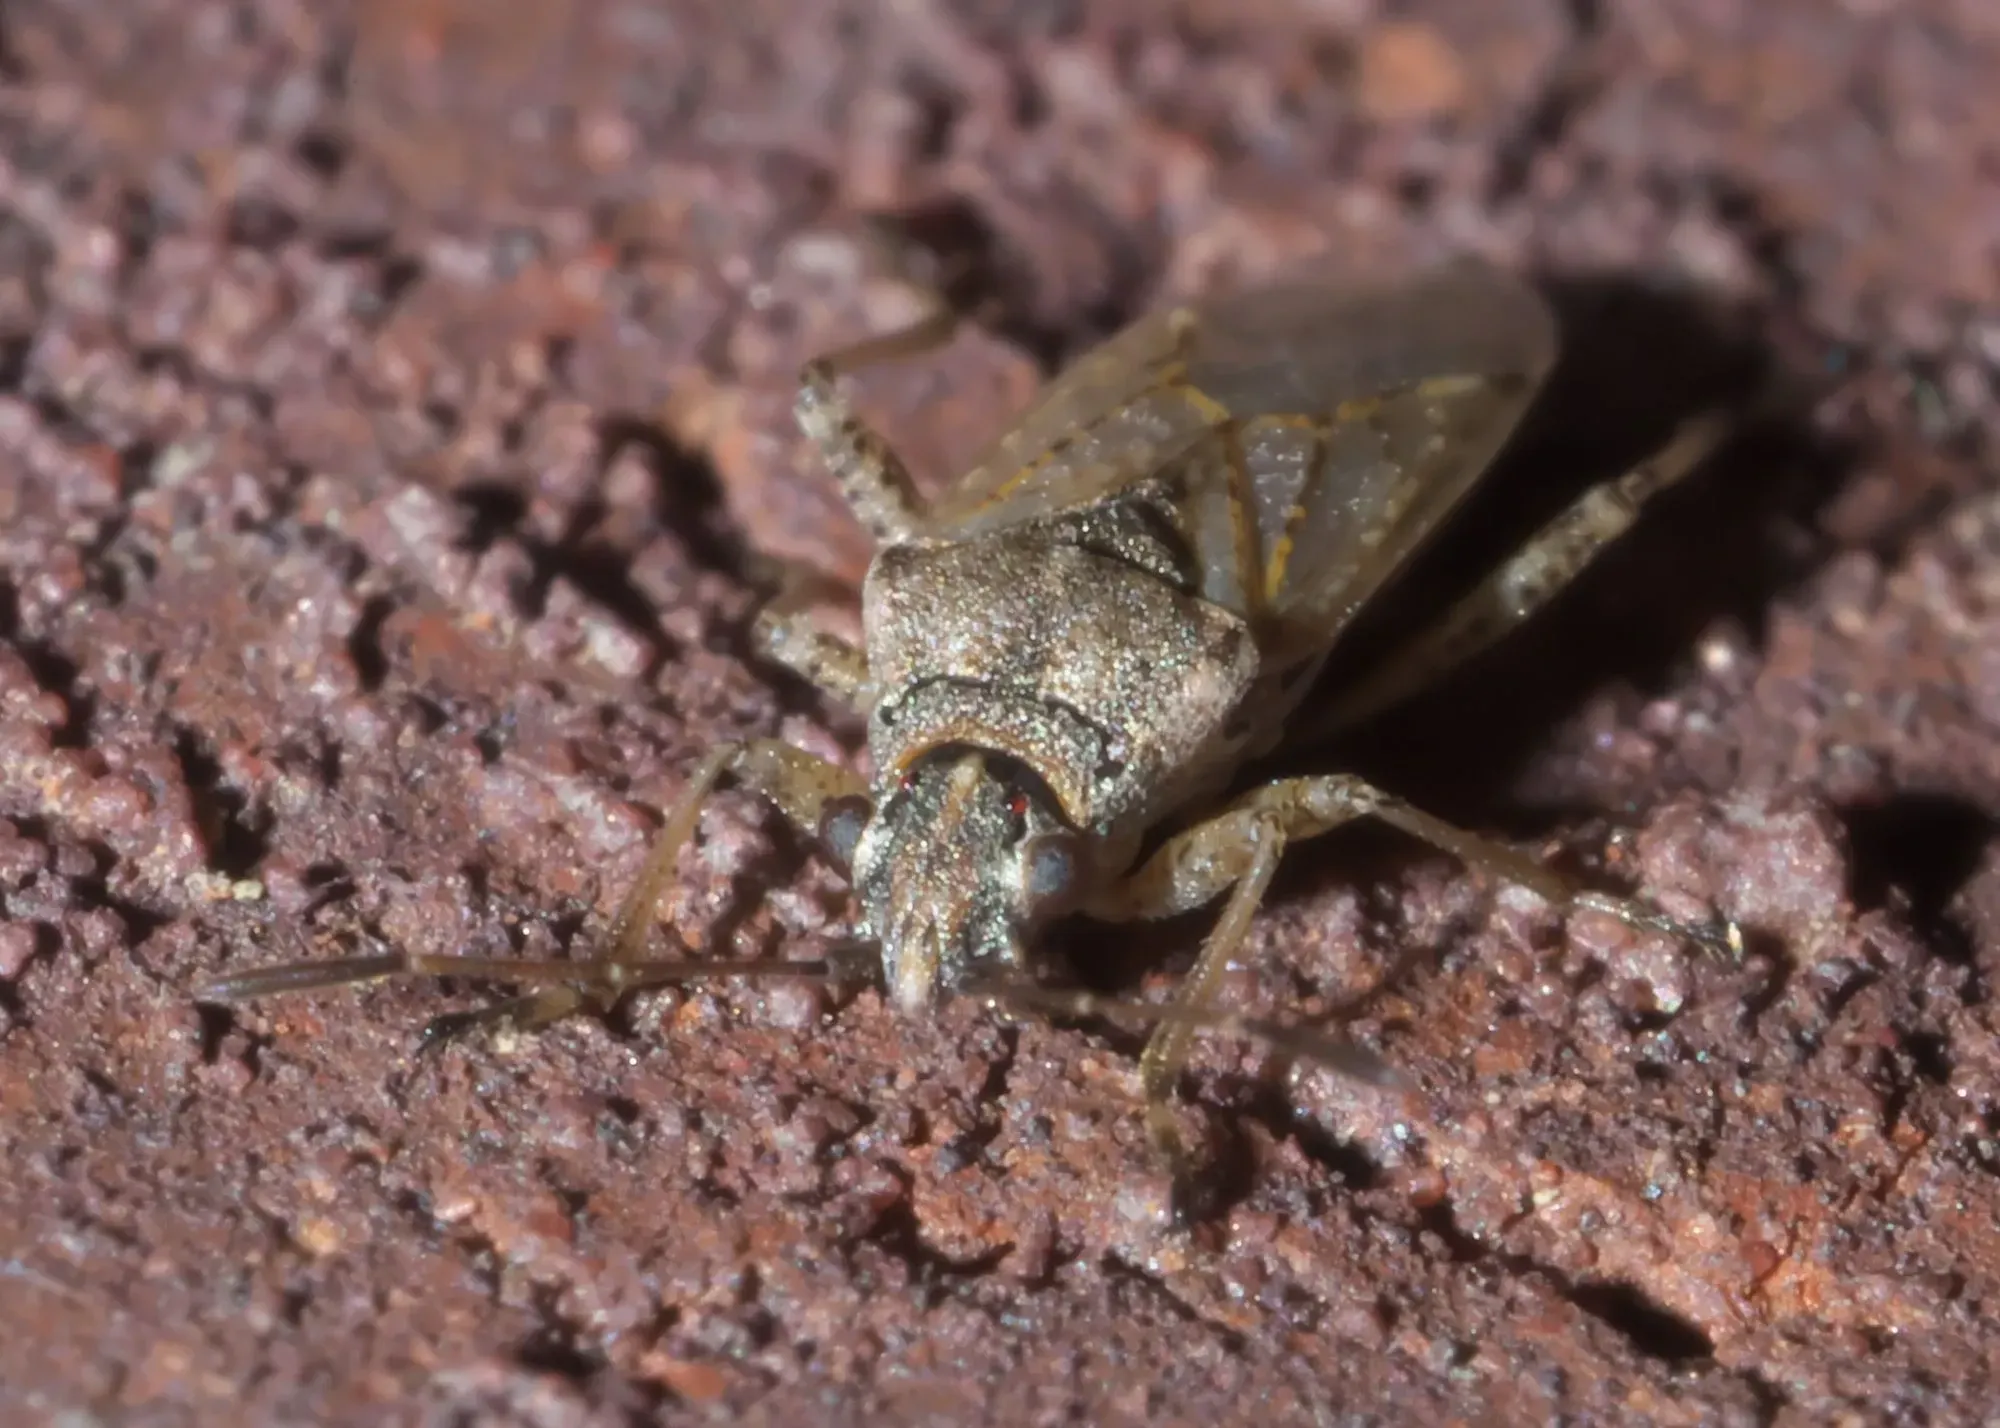 A False chinch bug on the muddy ground.